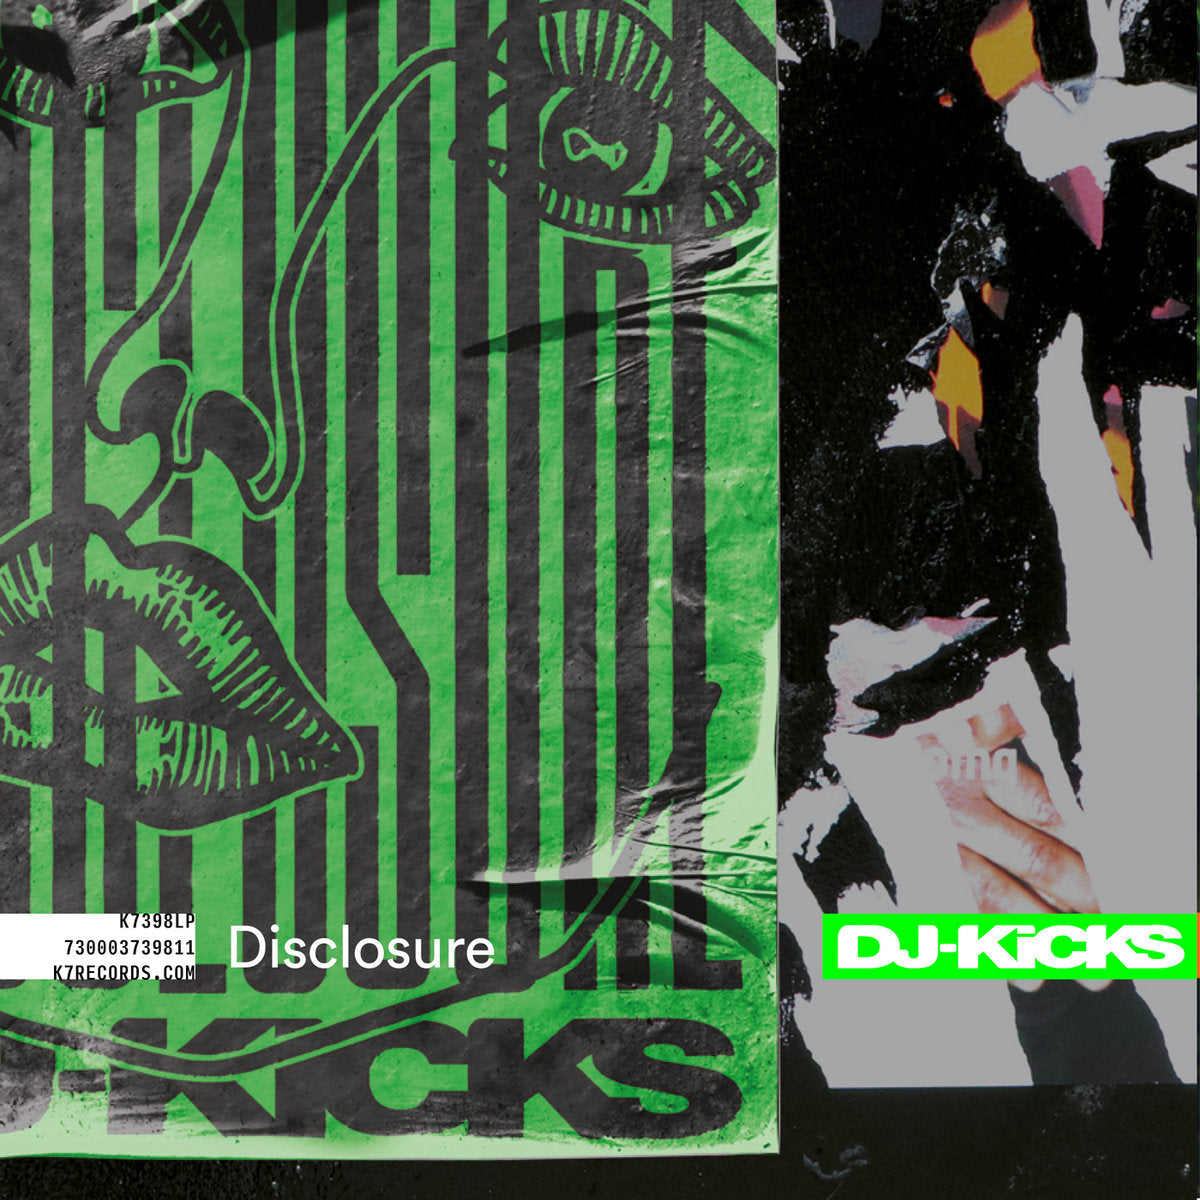 Disclosure - DJ-Kicks (Coloured Vinyl)